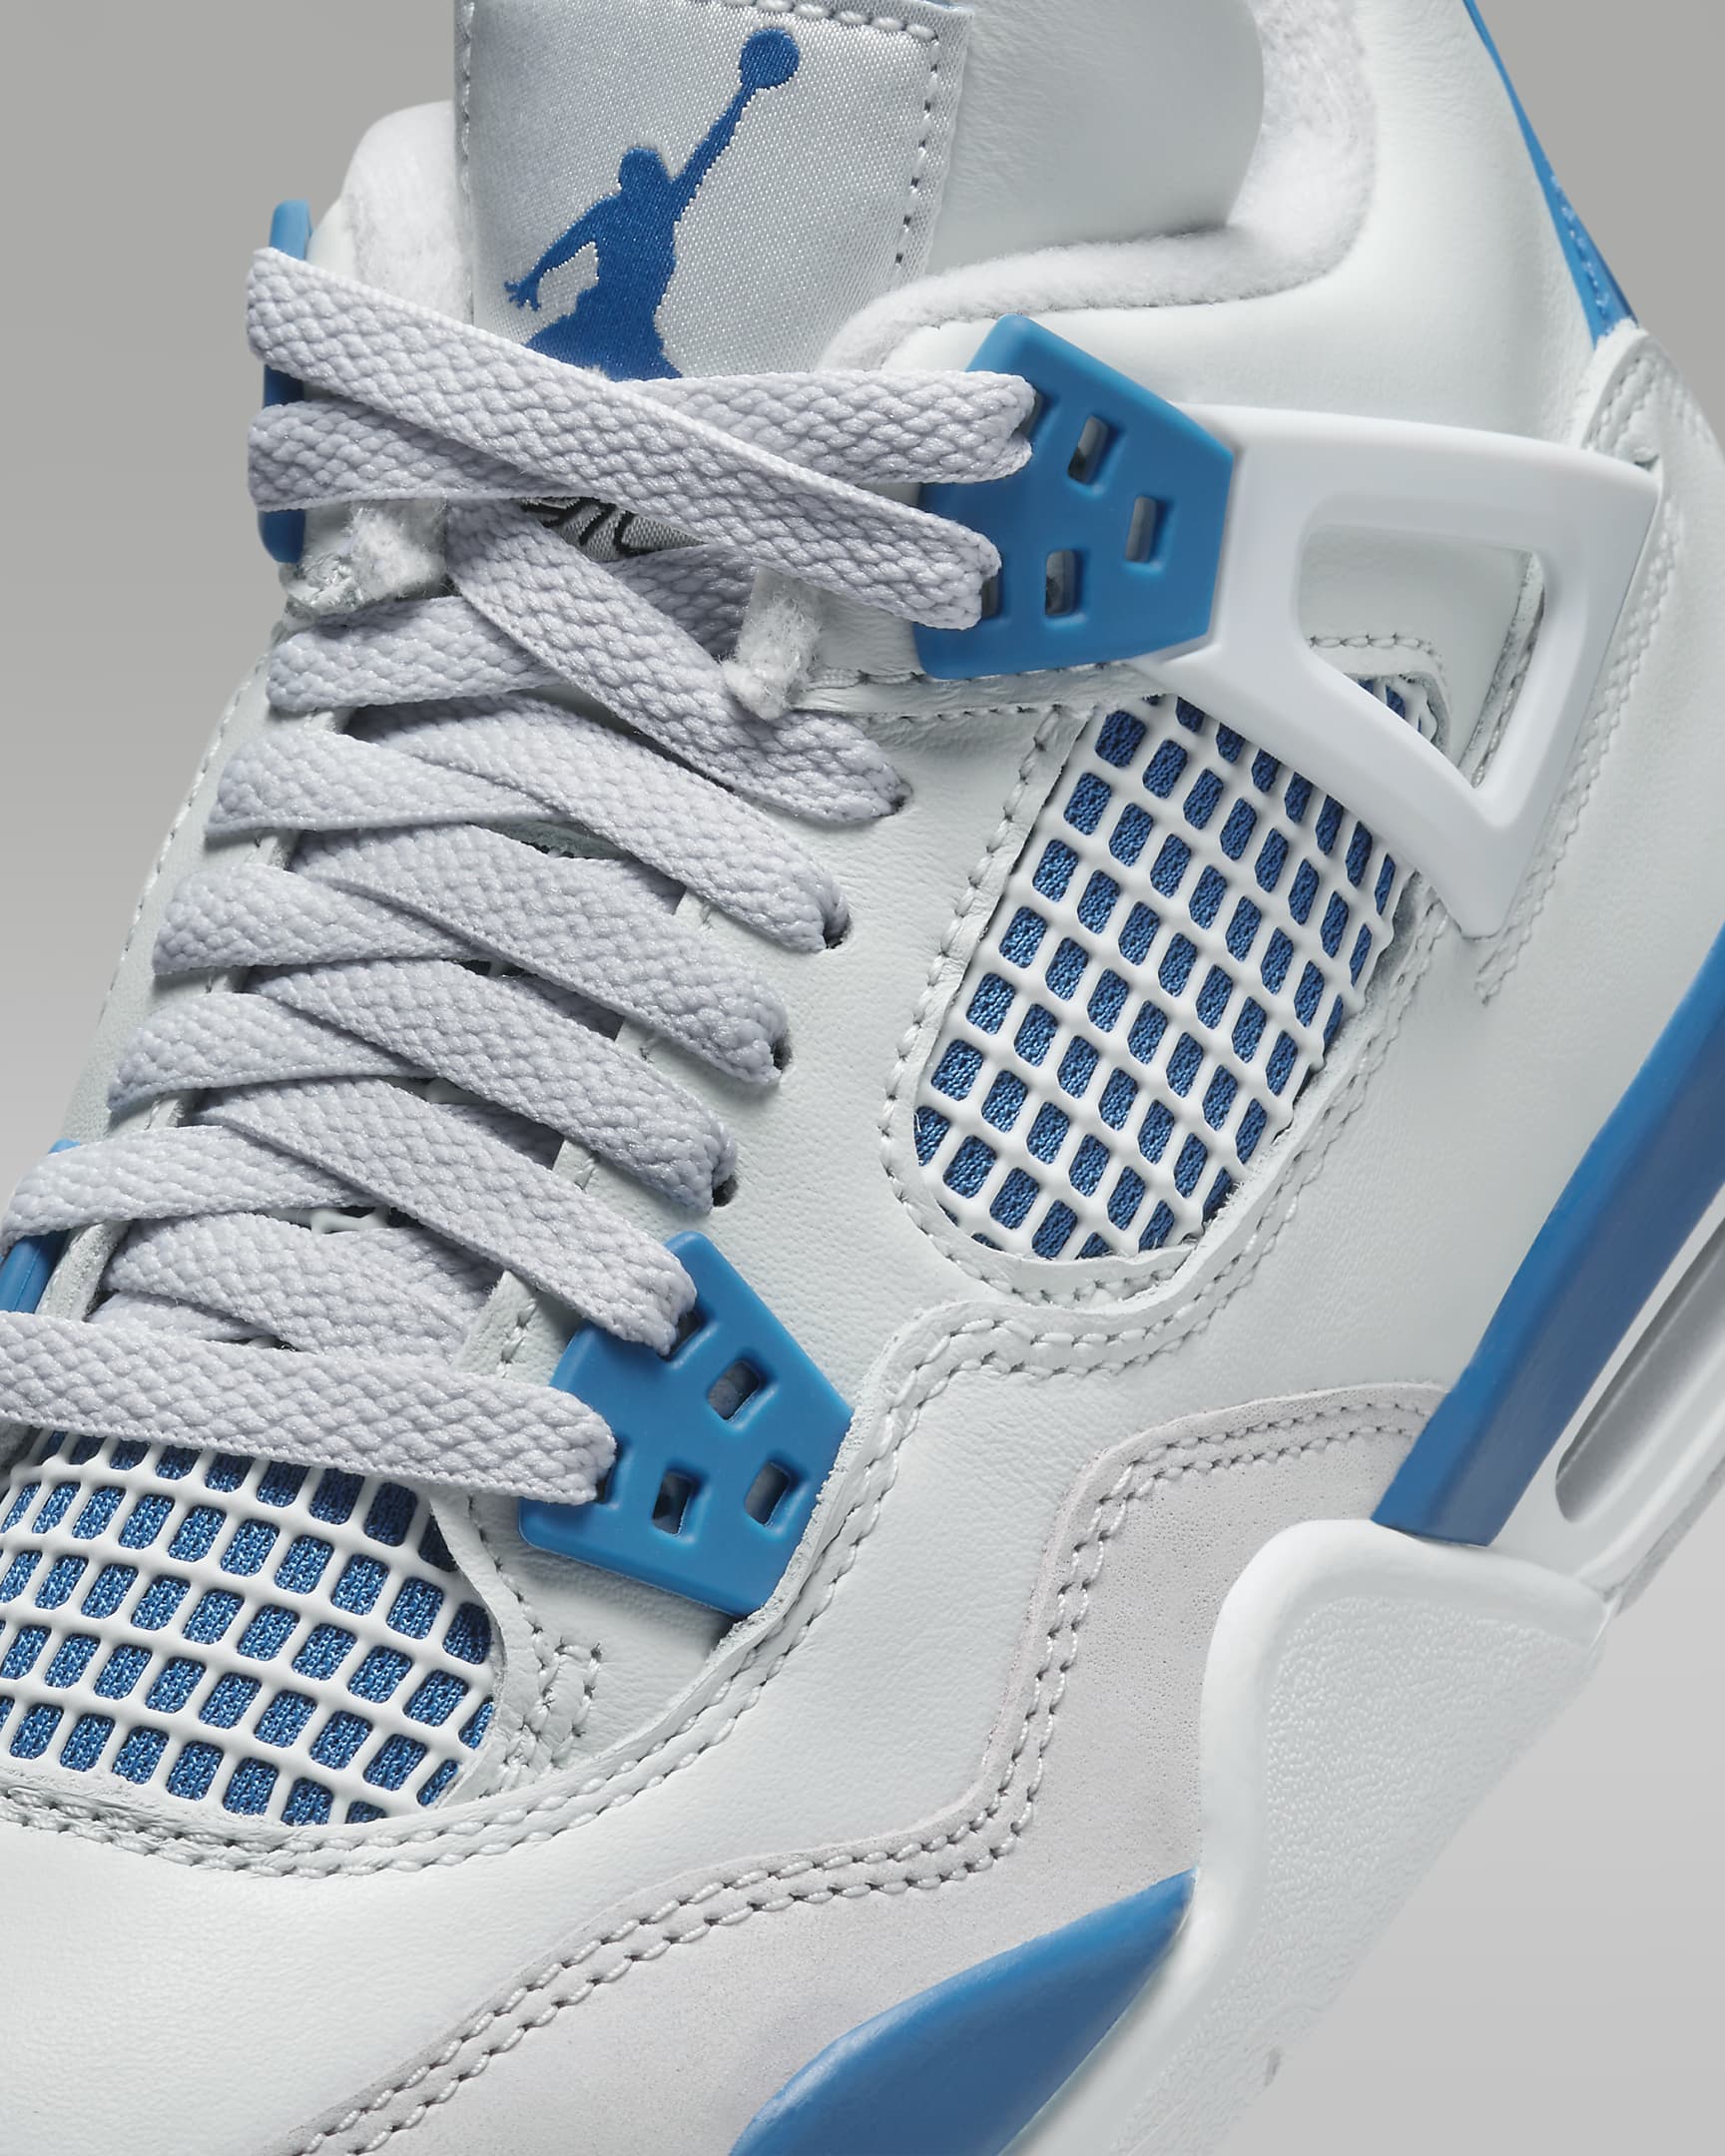 Air Jordan 4 Retro "Industrial Blue" Big Kids' Shoes - Off White/Neutral Grey/Military Blue